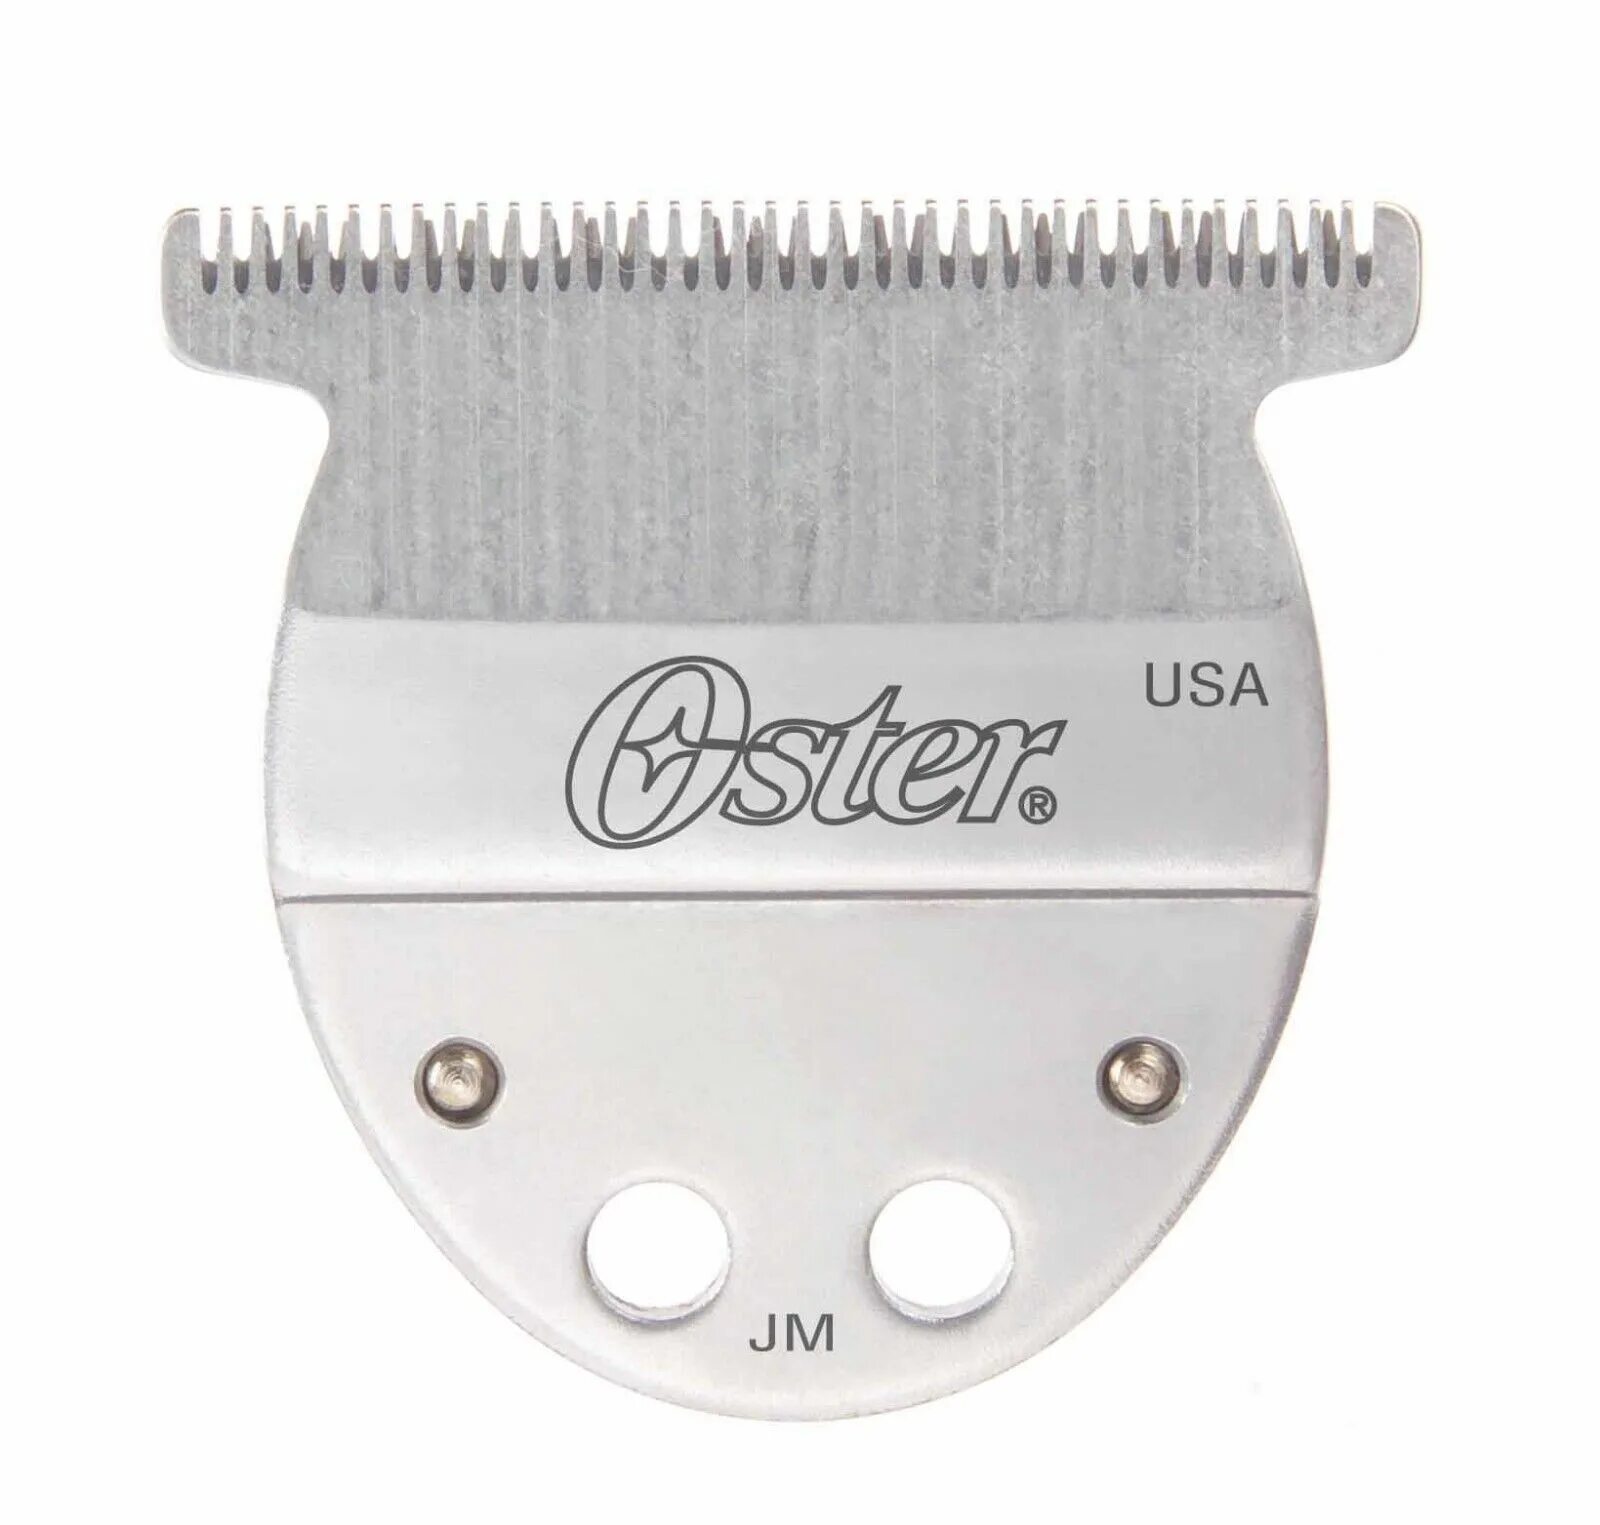 Машинка остер ножи. Oster Finisher нож триммер. Oster adjust Pro ножевой блок. Нож Oster 913-80. Машинка Oster Finisher модель 59-84f.